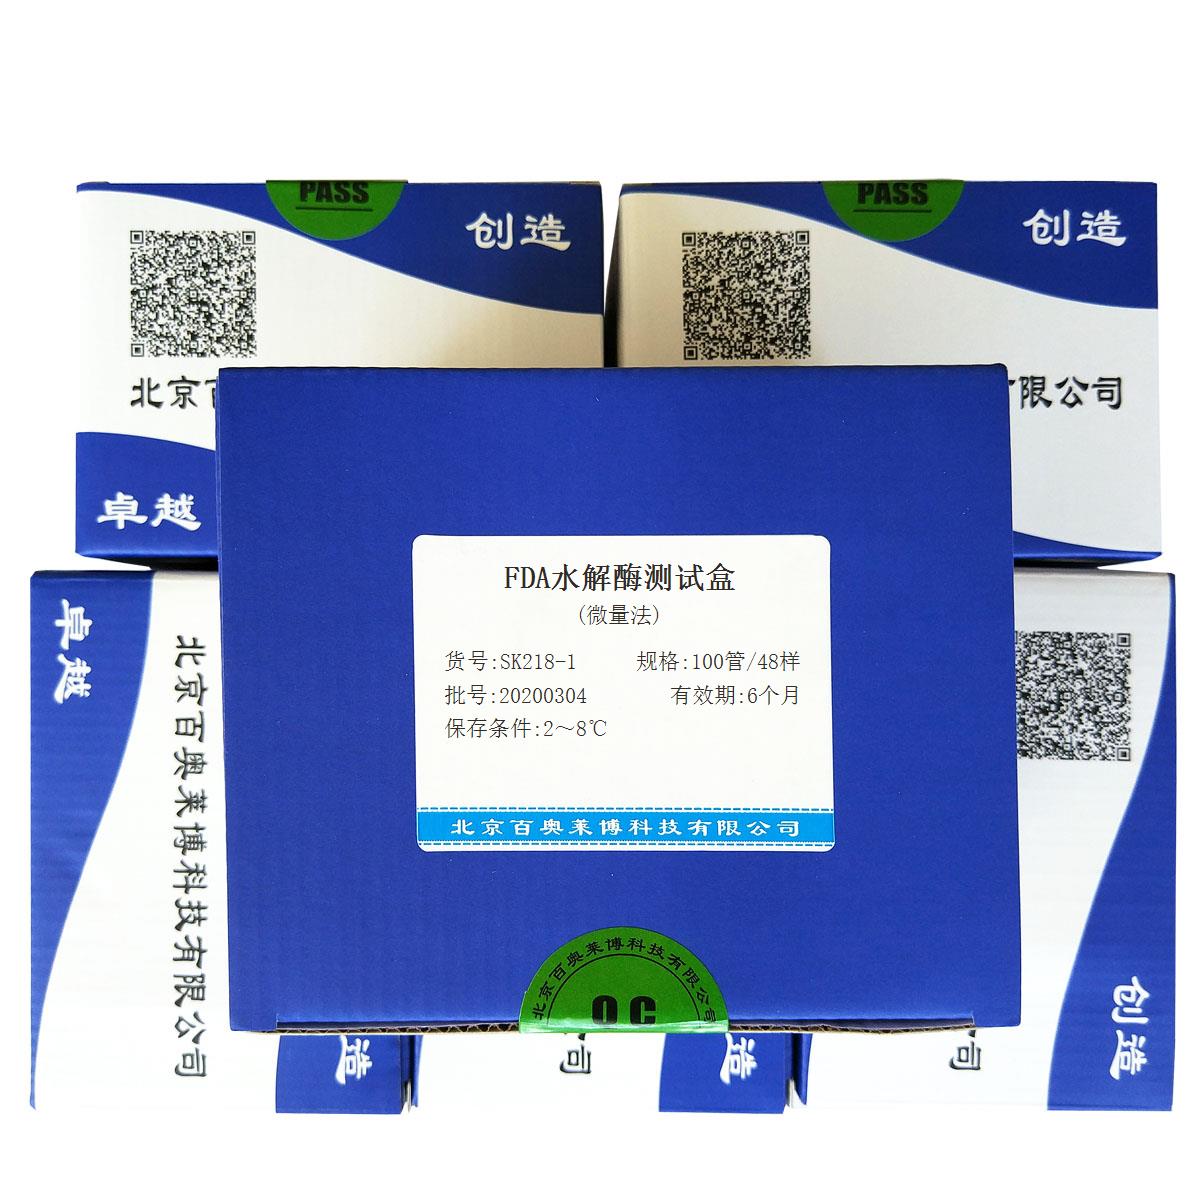 FDA水解酶测试盒(微量法)北京厂家